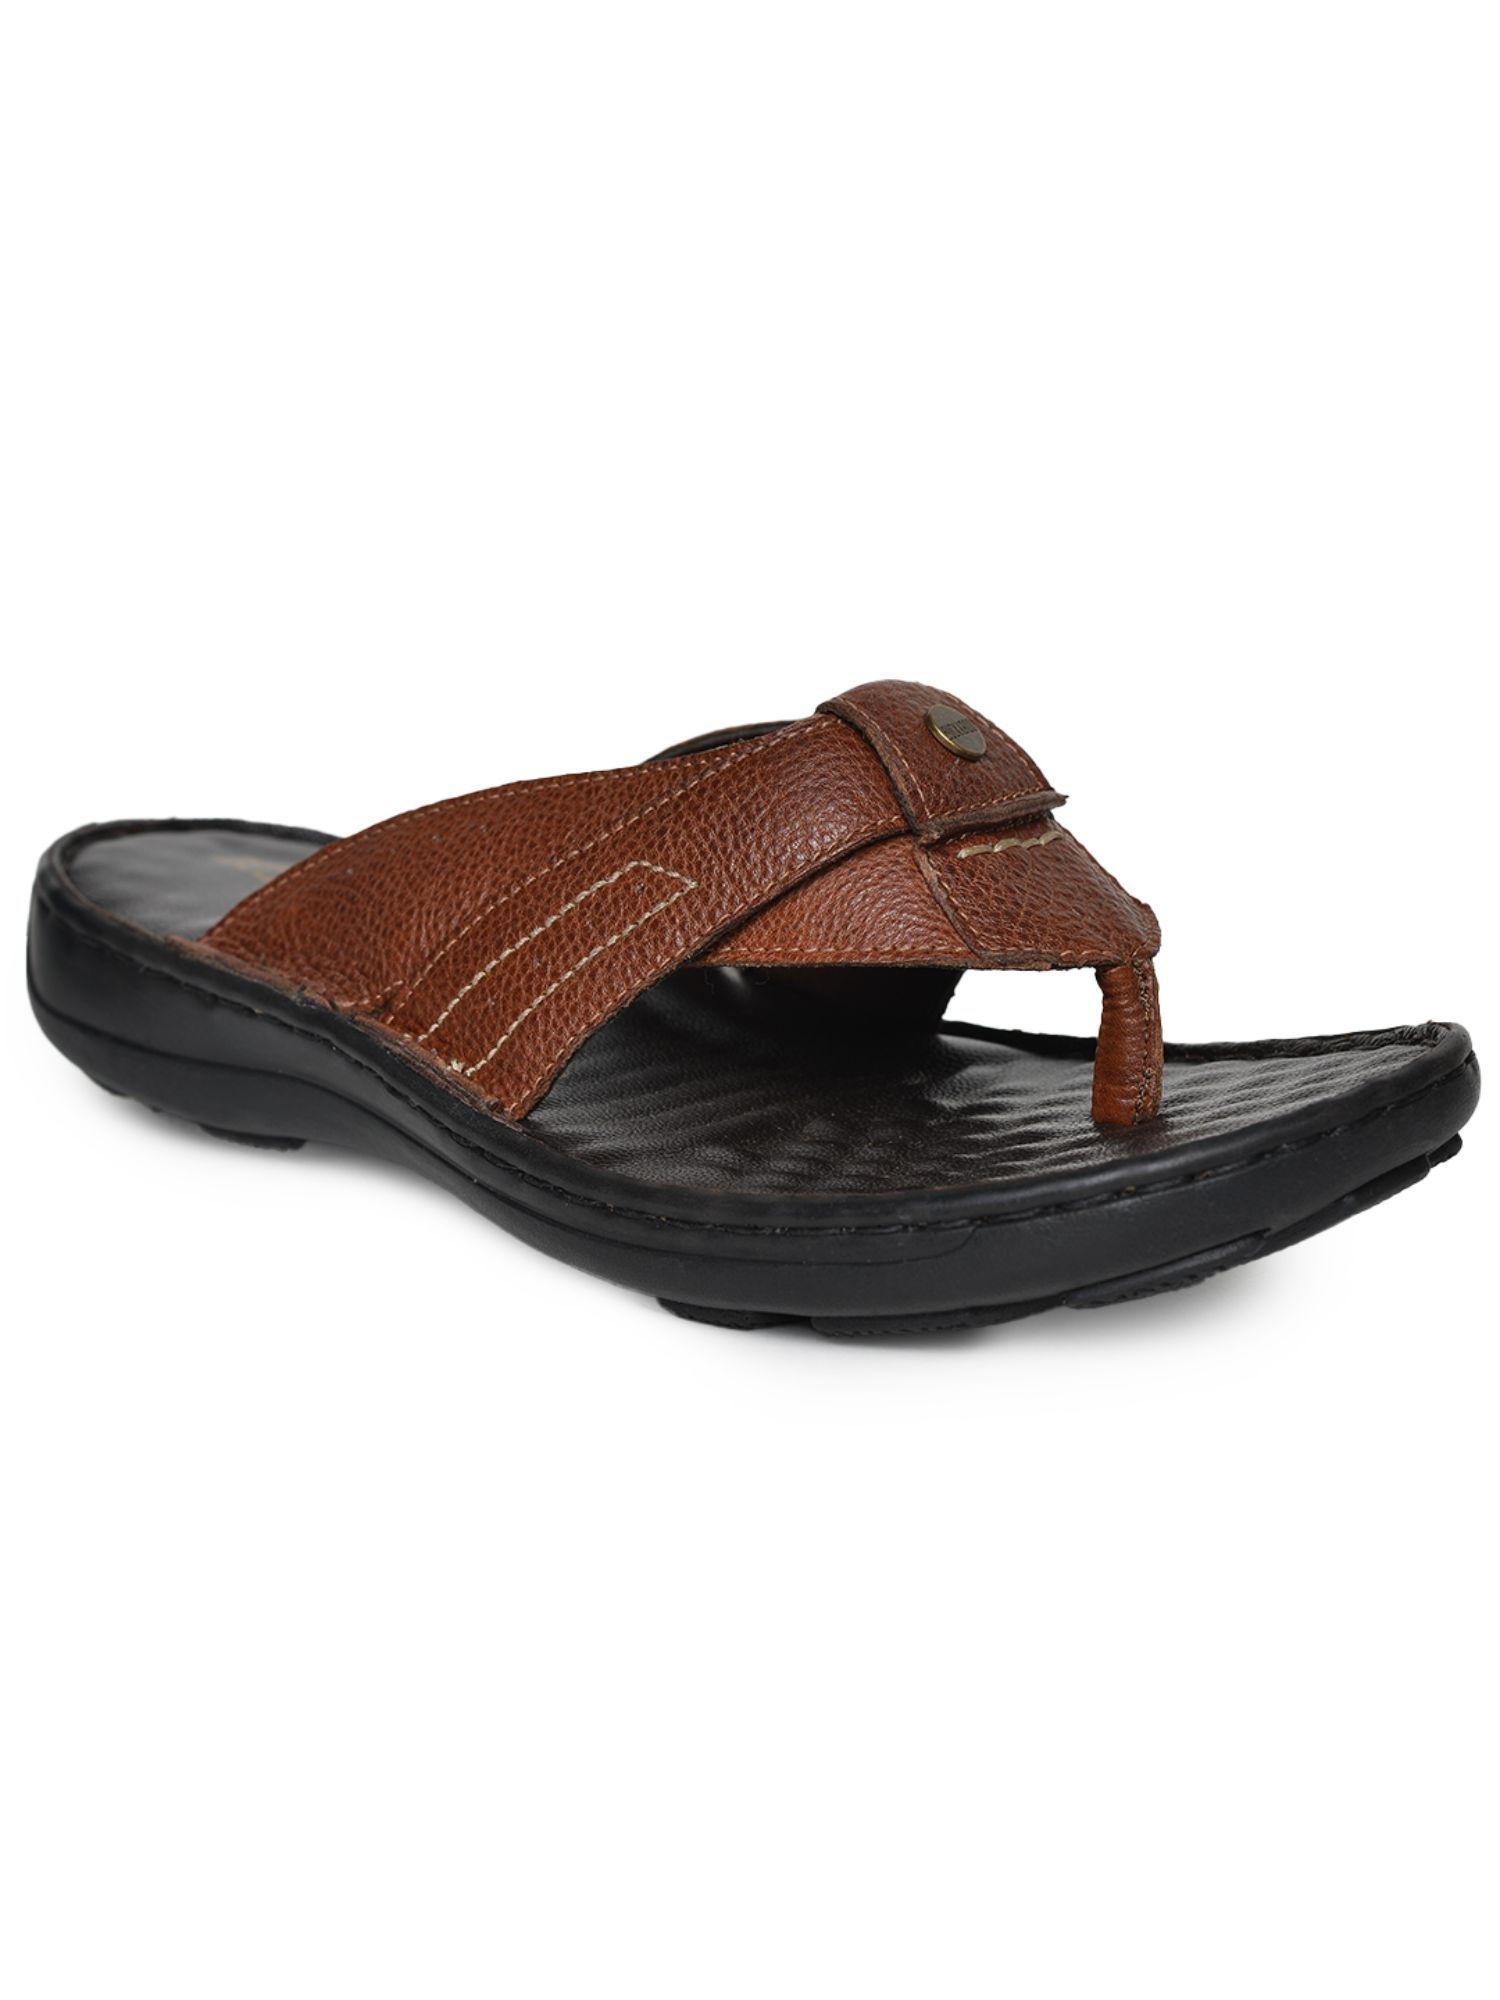 zanelio genuine leather casual sandals for mens